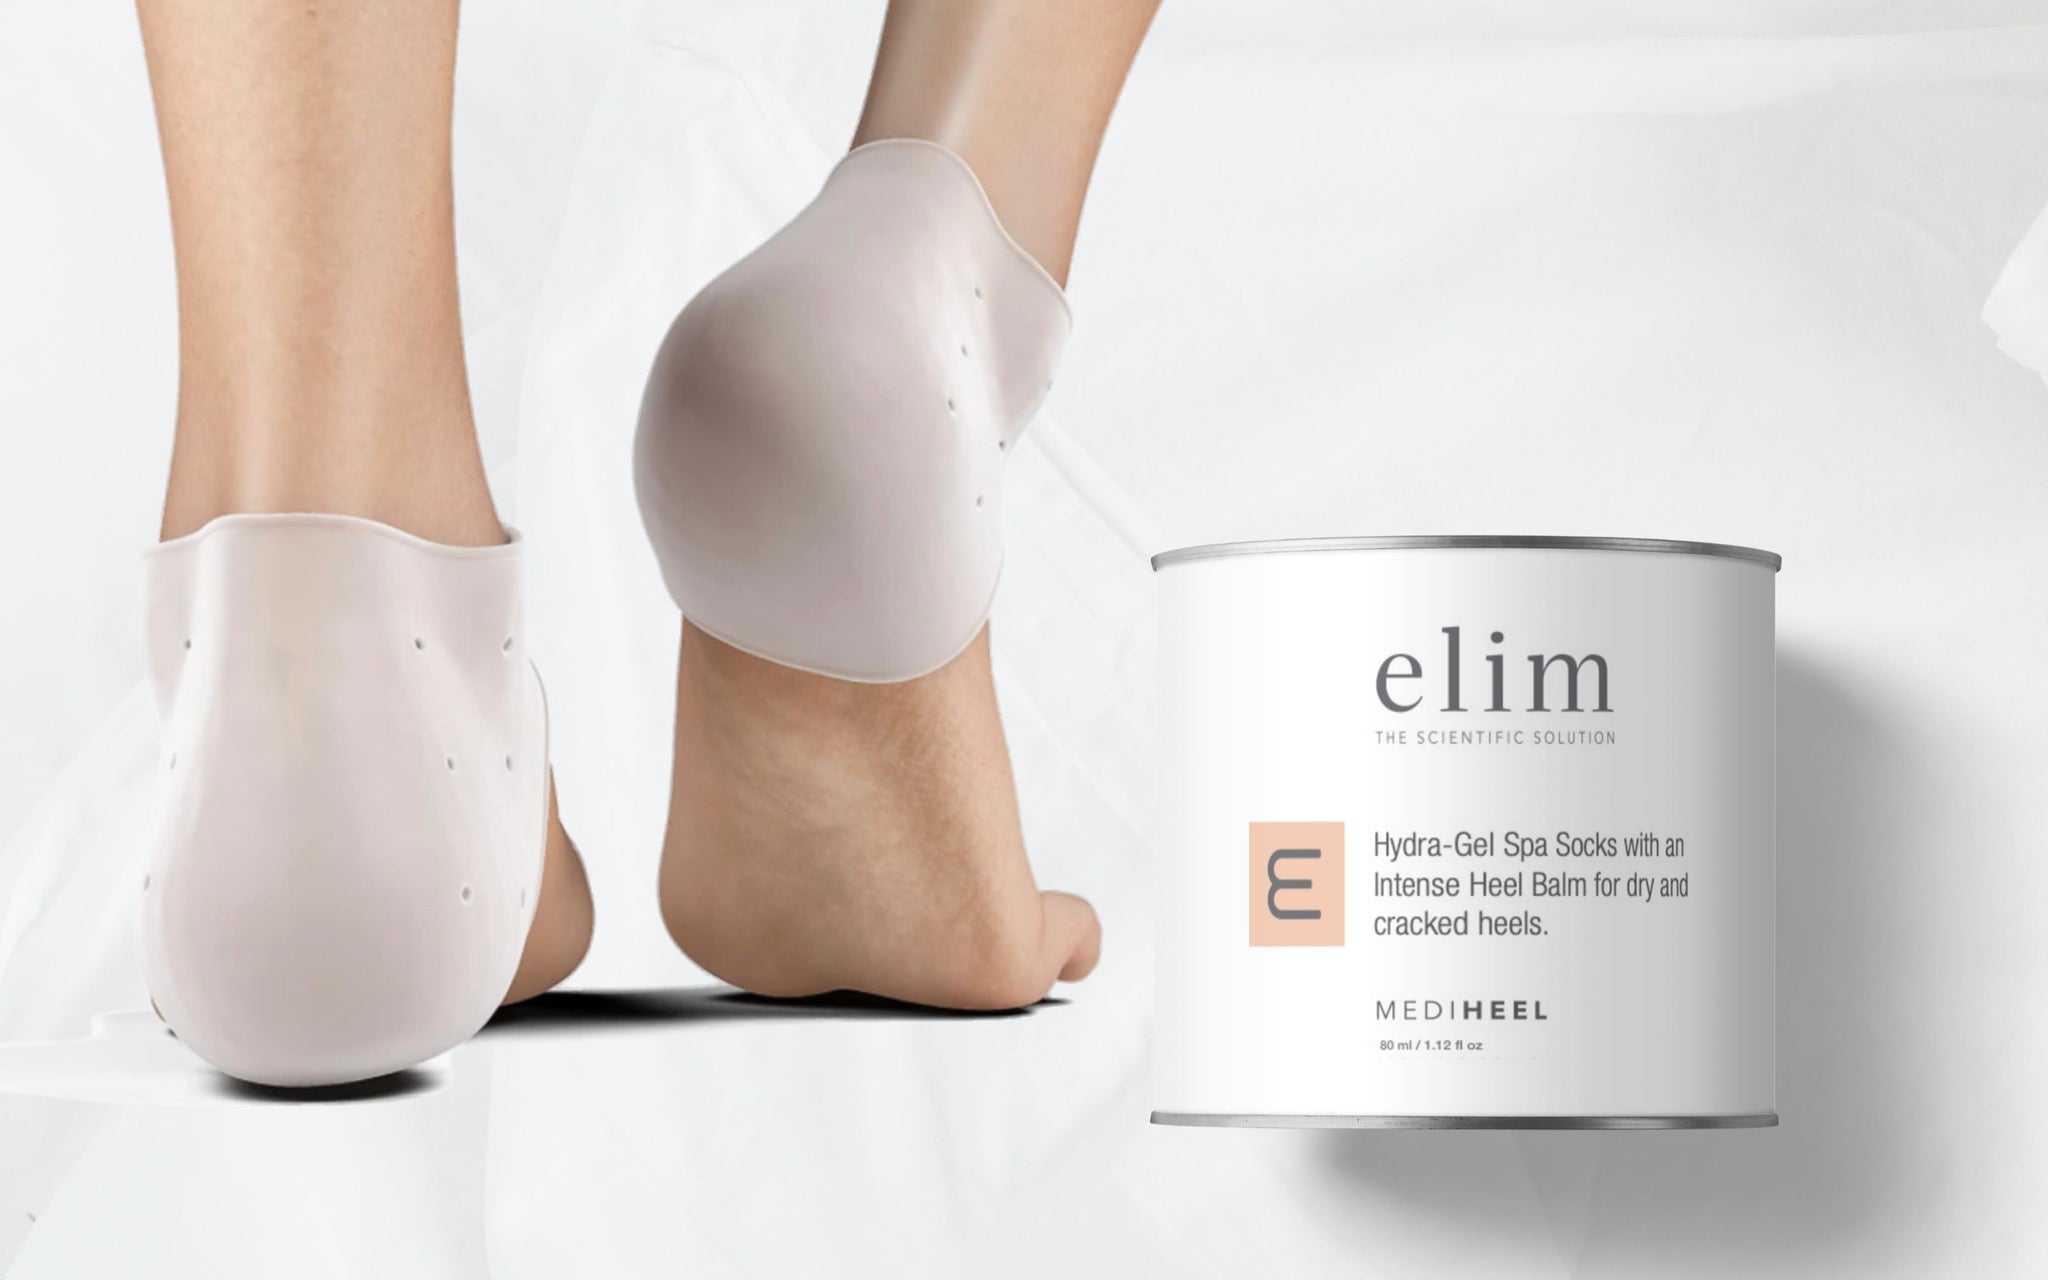 fcity.in - Silicon Socks Heel For Crack Spa Gel Socks For Women And Men Feet